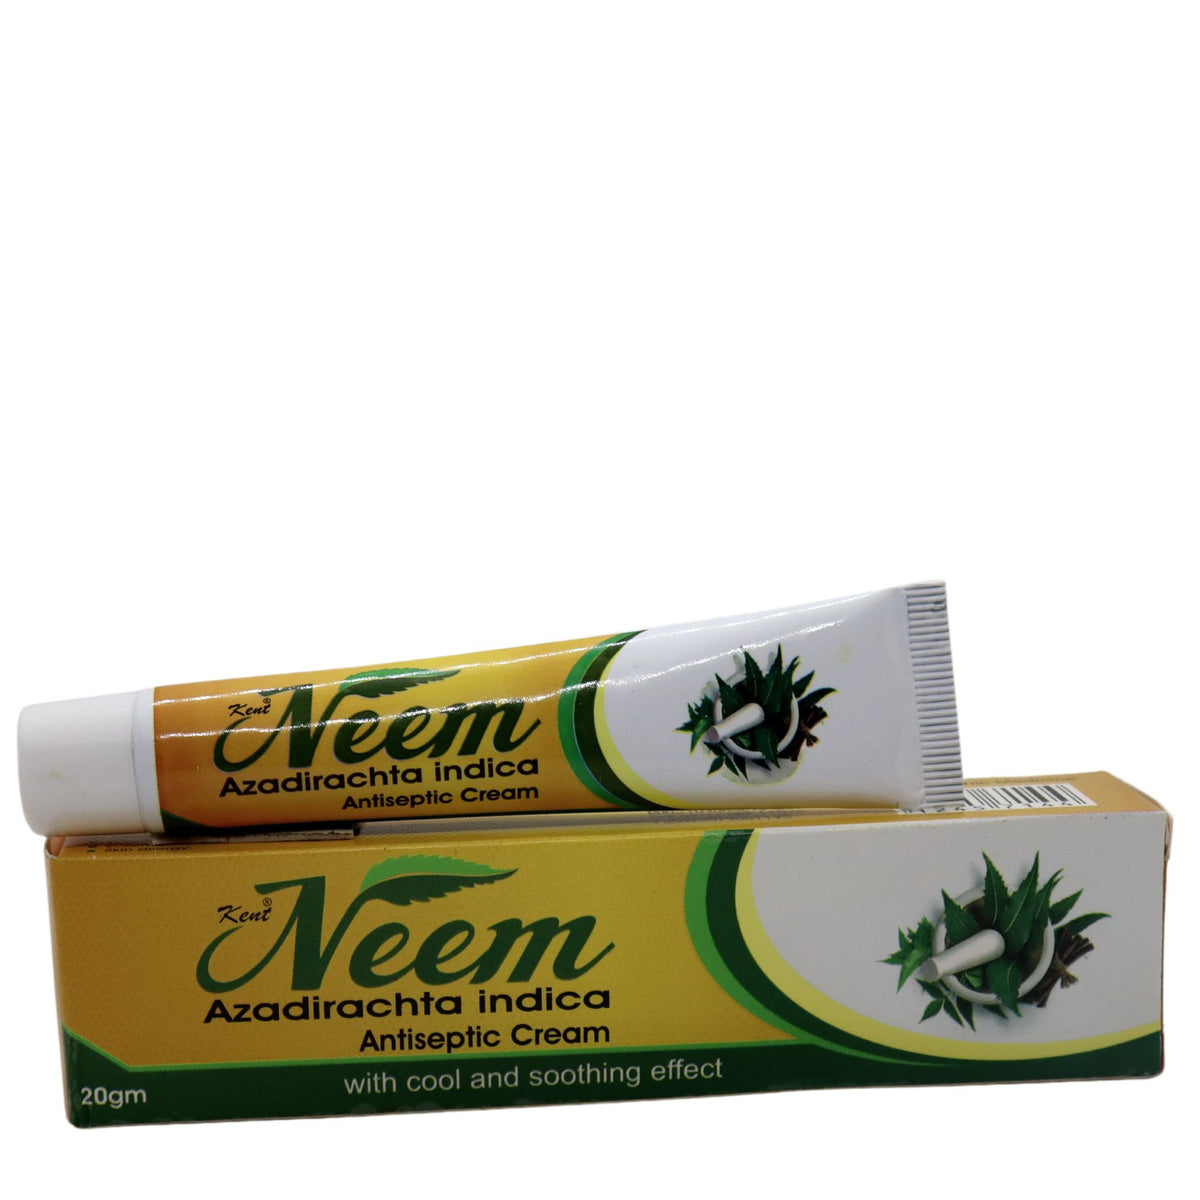 Neem cream